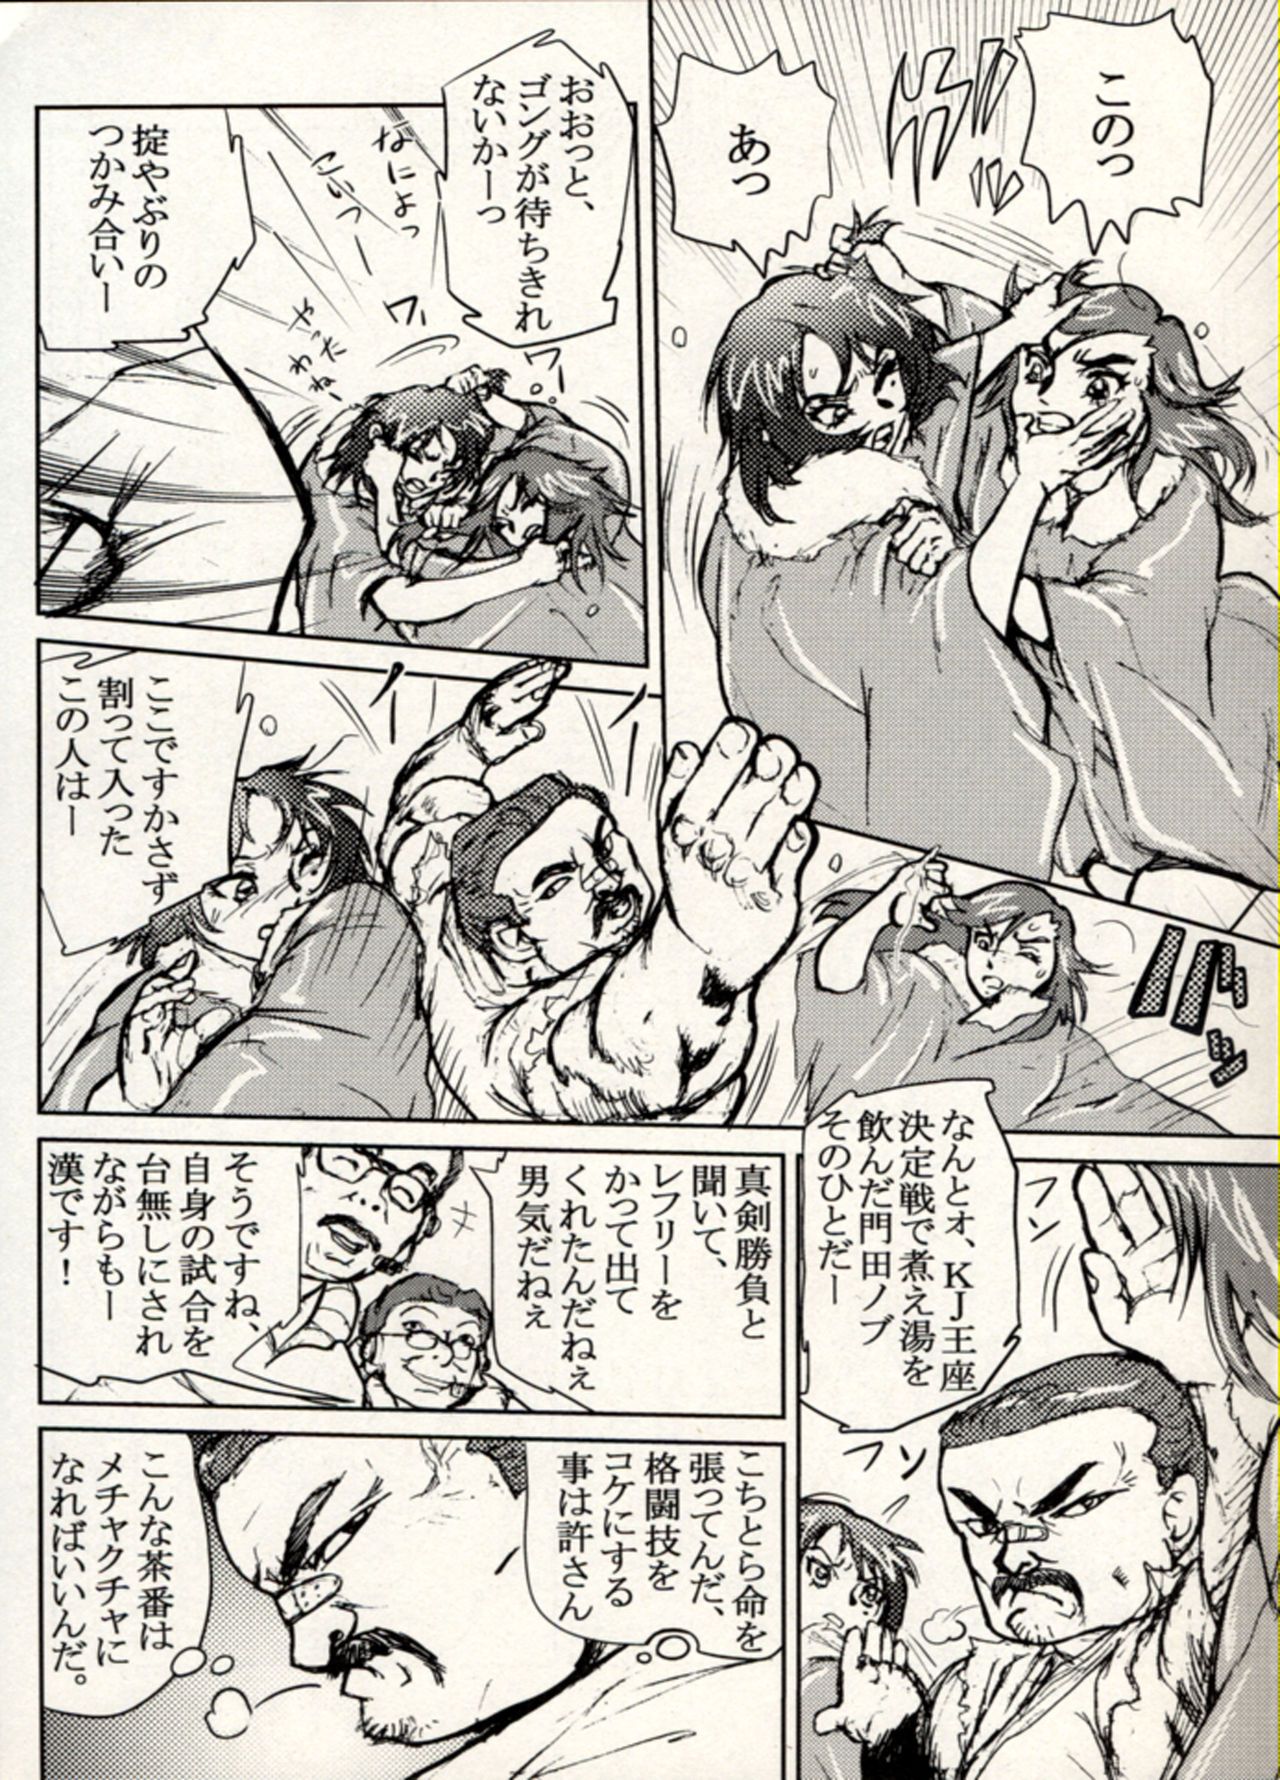 Manga Battle Volume 15 22